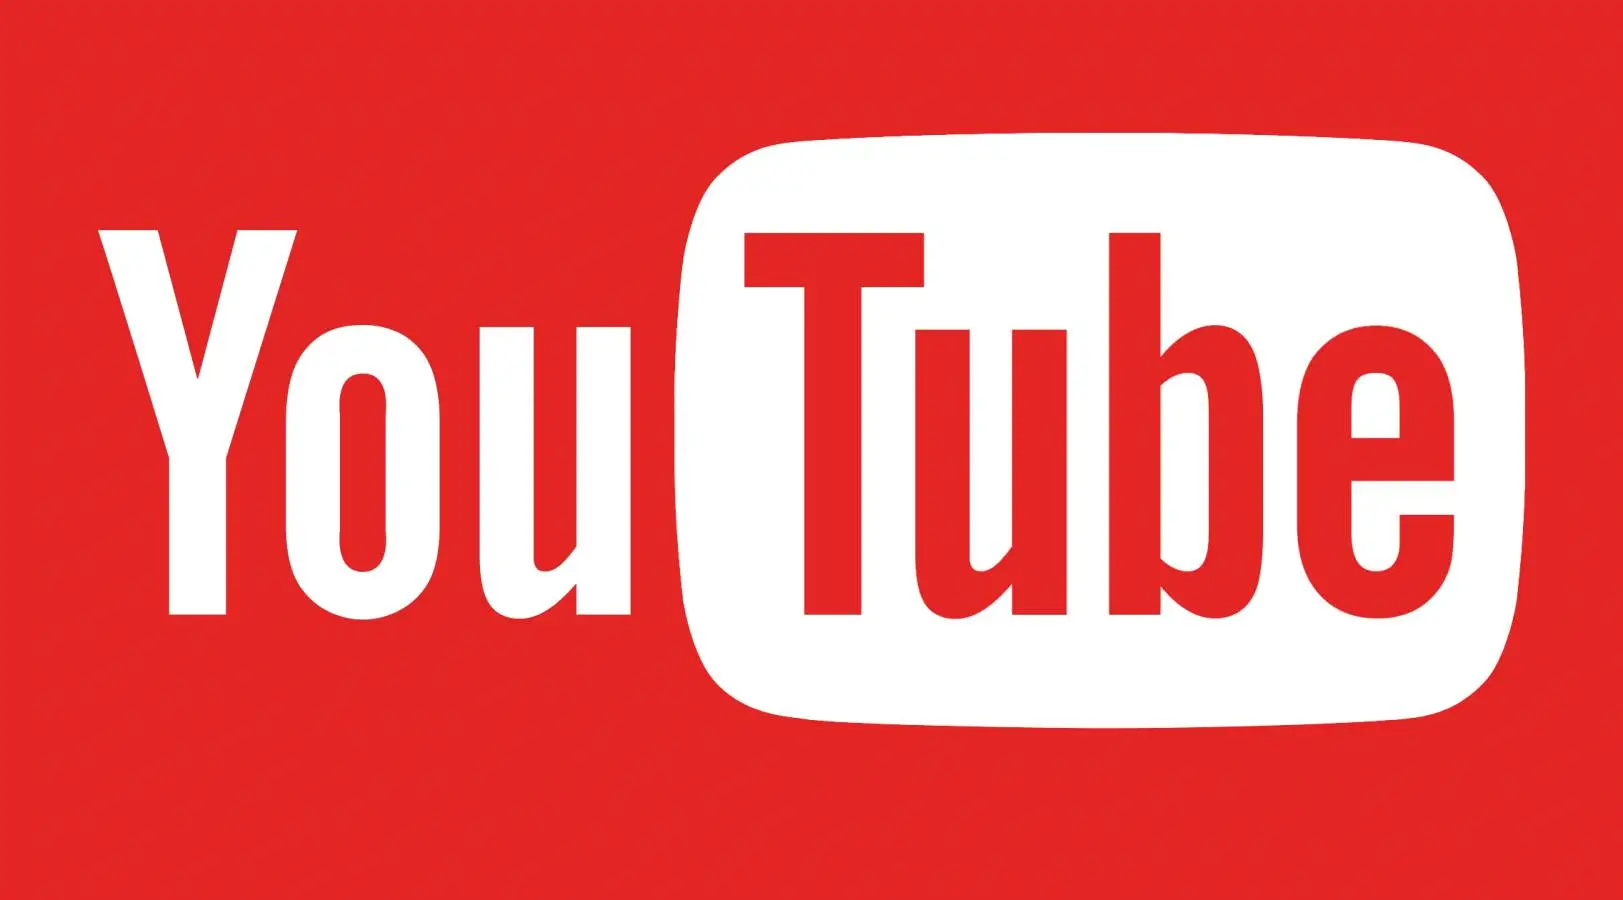 YouTube Update aduce Noutati in Aplicatia pentru Telefoane si Tablete